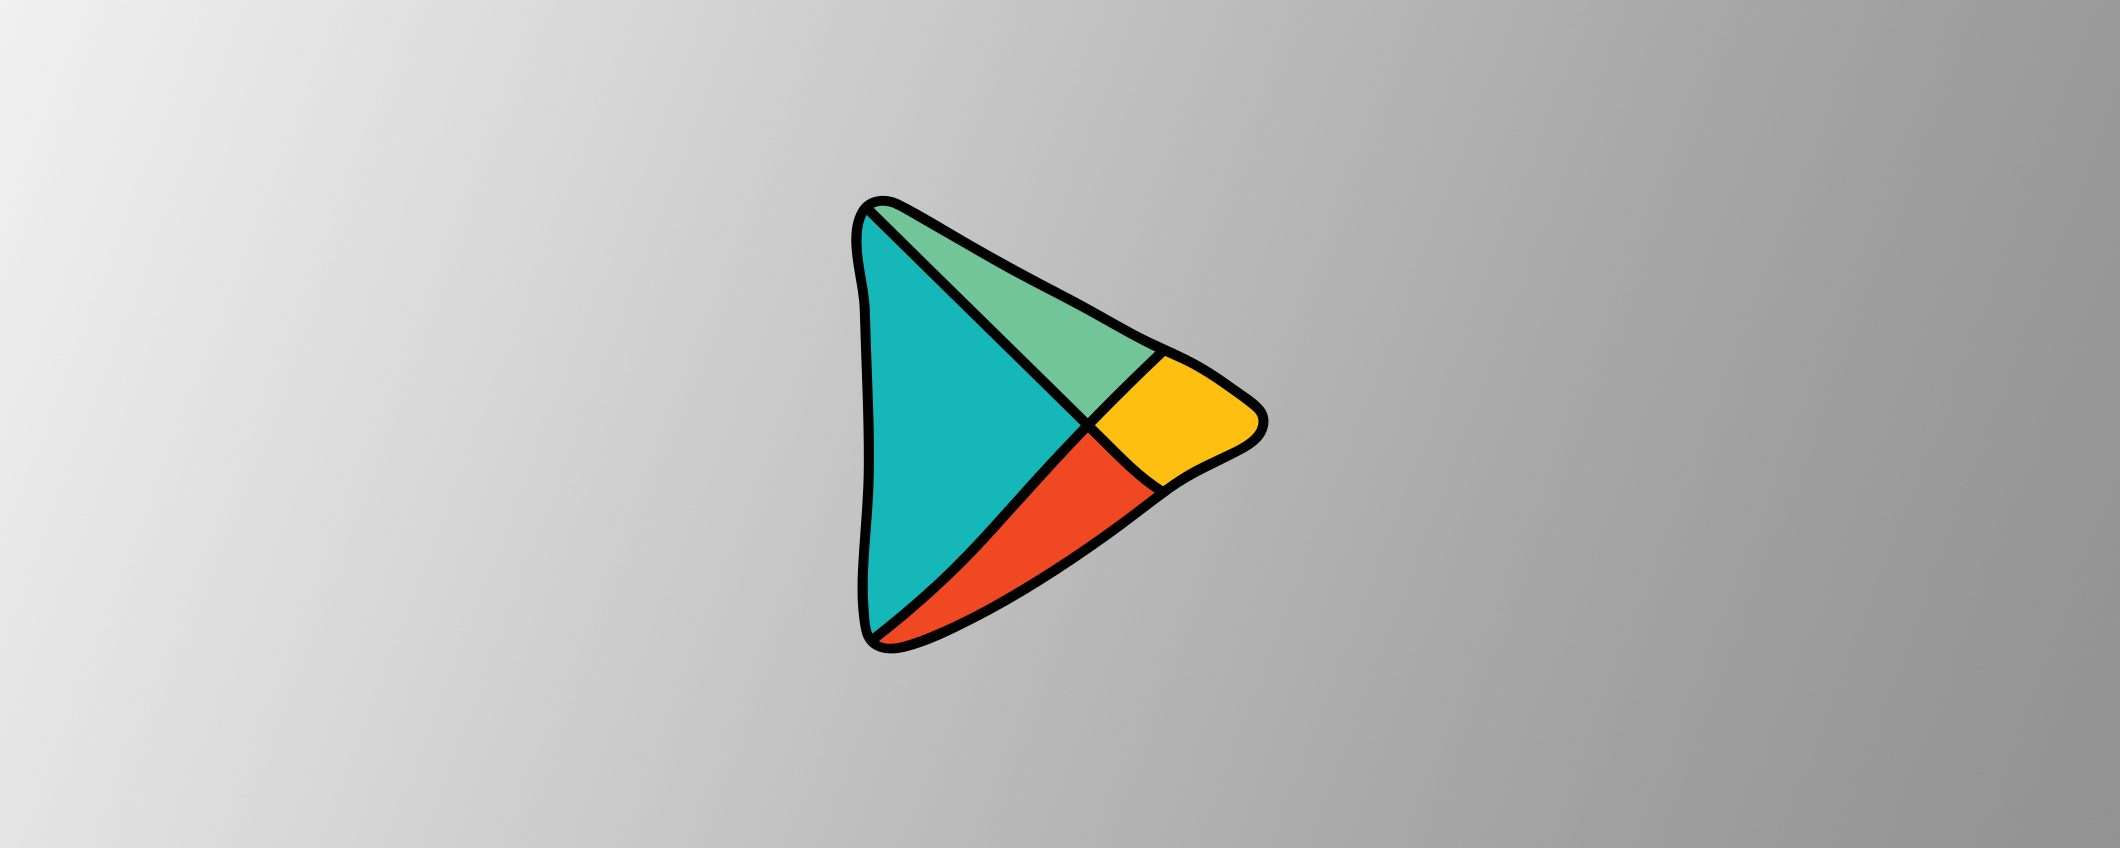 Play Store: Google strizza l'occhio ai tablet